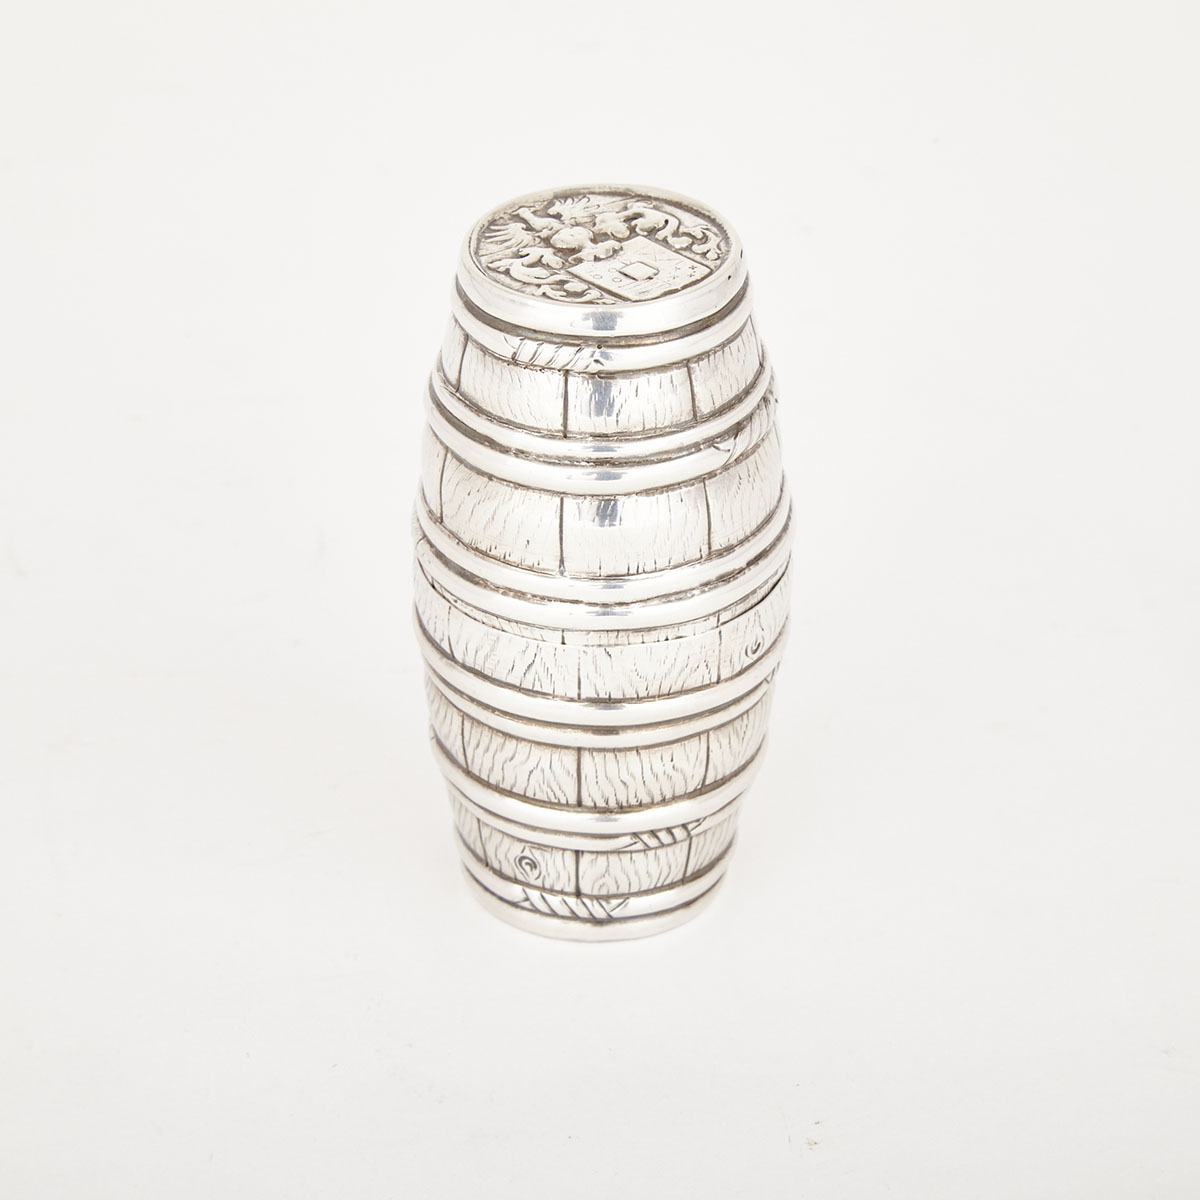 German Silver Barrel-Form Double Beaker, B. Neresheimer & Söhne, Hanau, late 19th century